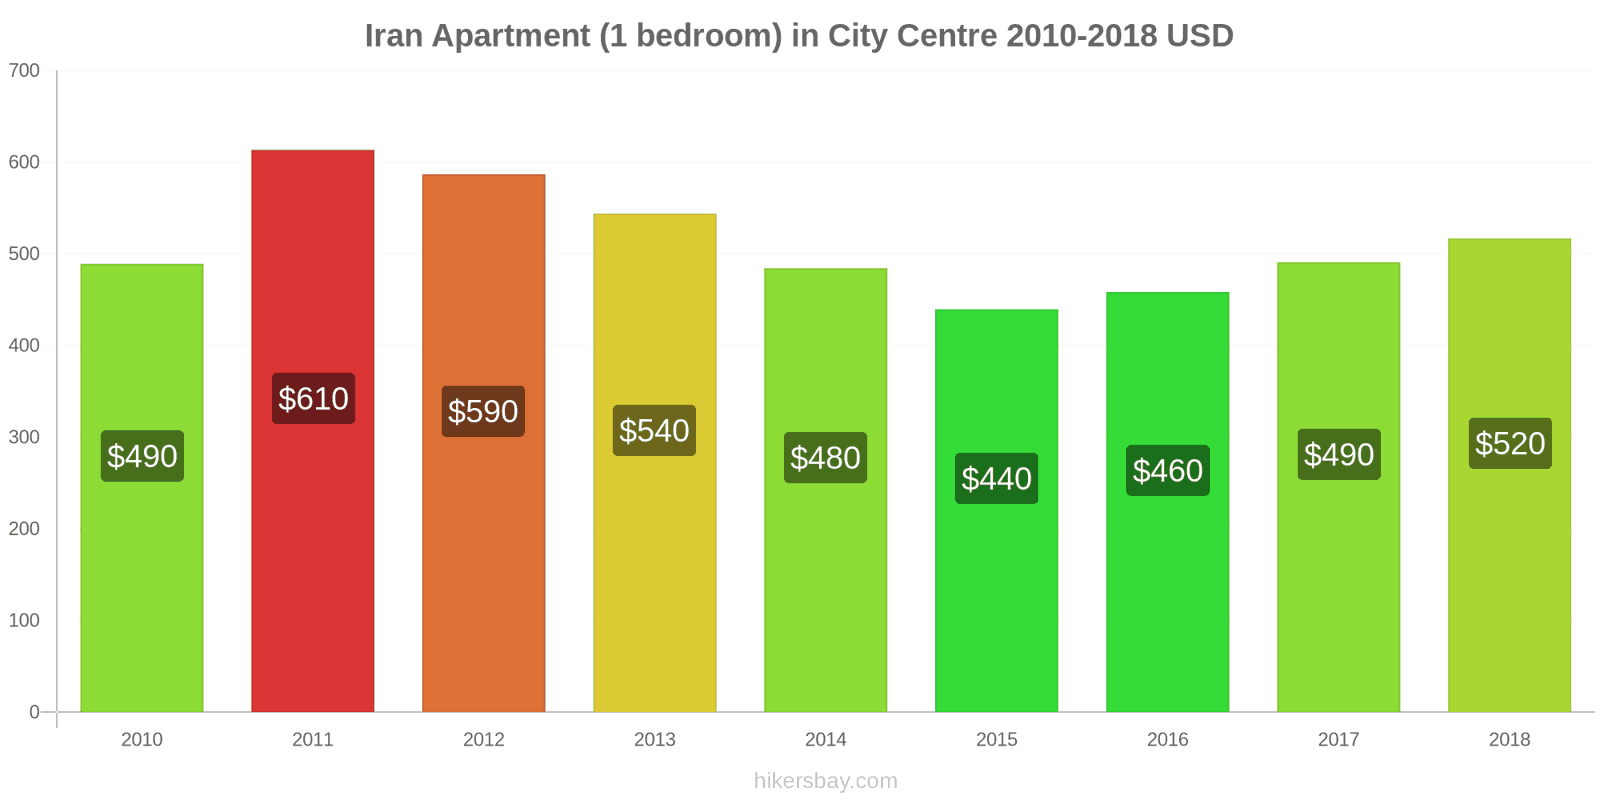 Iran price changes Apartment (1 bedroom) in city centre hikersbay.com